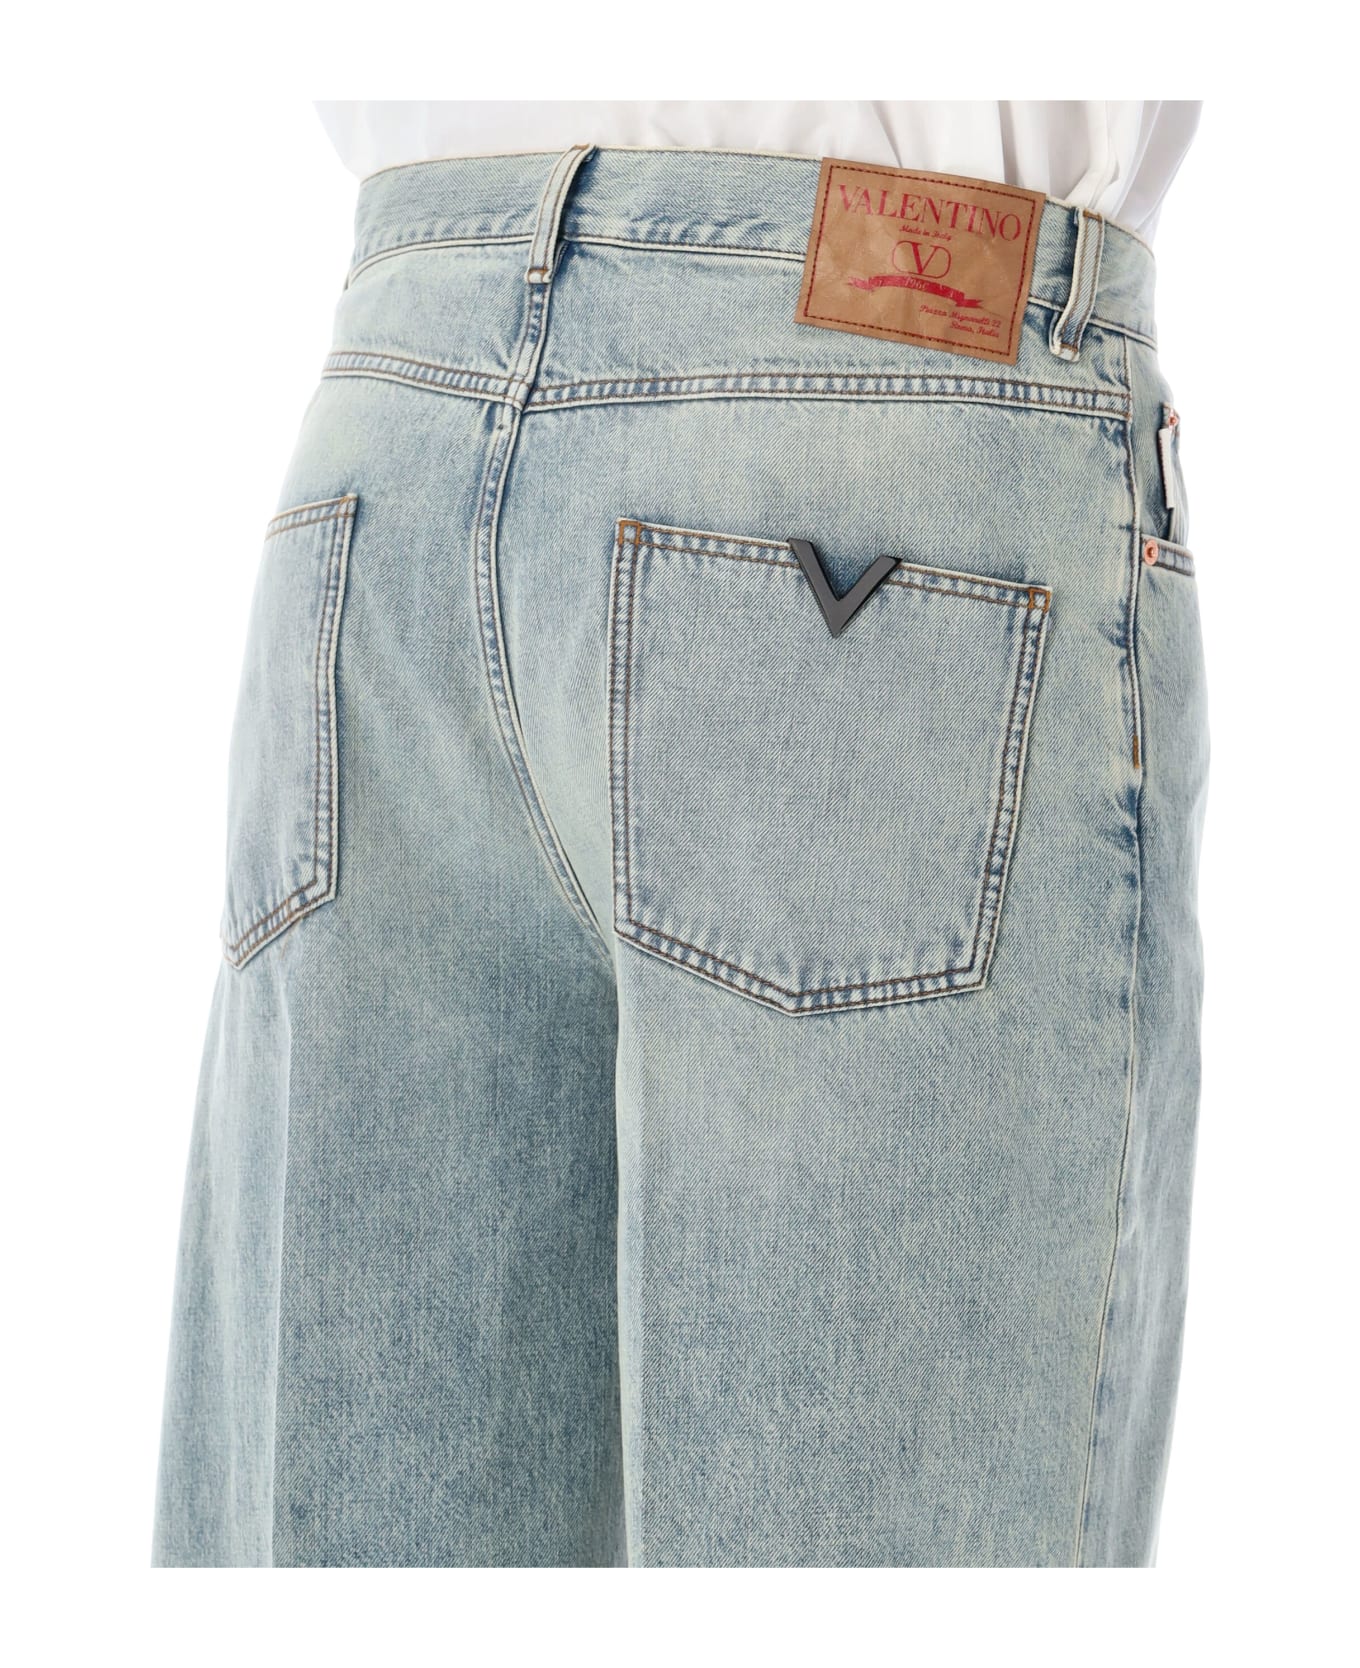 Valentino Garavani Oversized Denim Jeans - LIGH BLUE